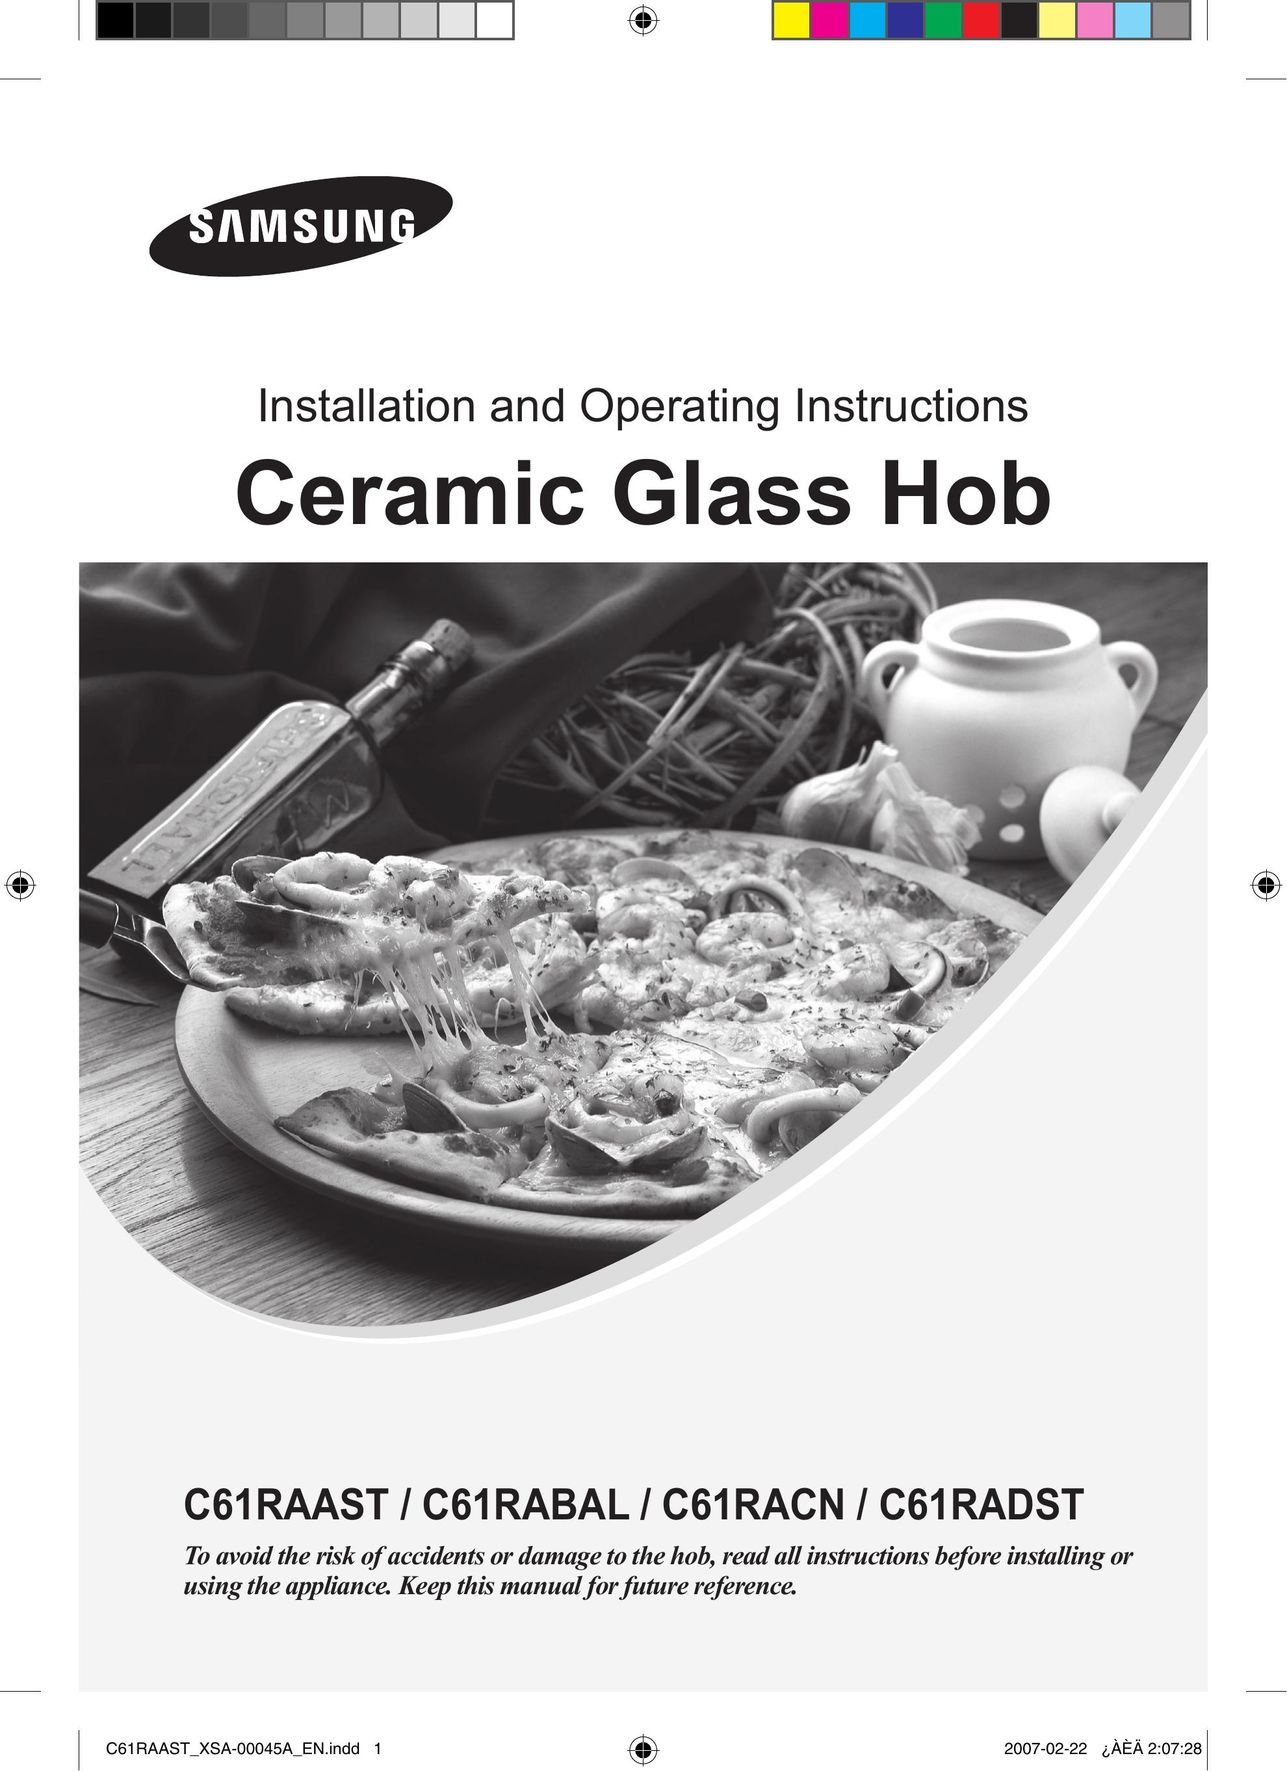 Samsung C61RACN Cooktop User Manual